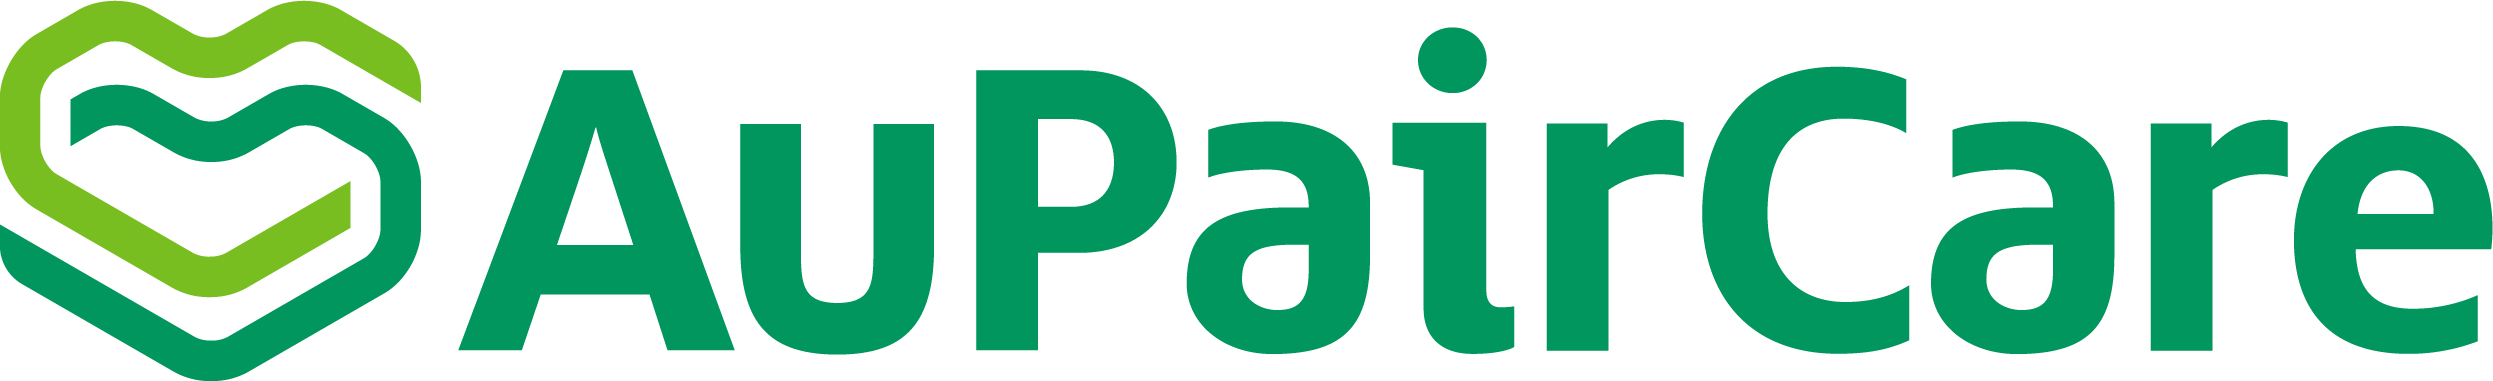 apc-logo-green